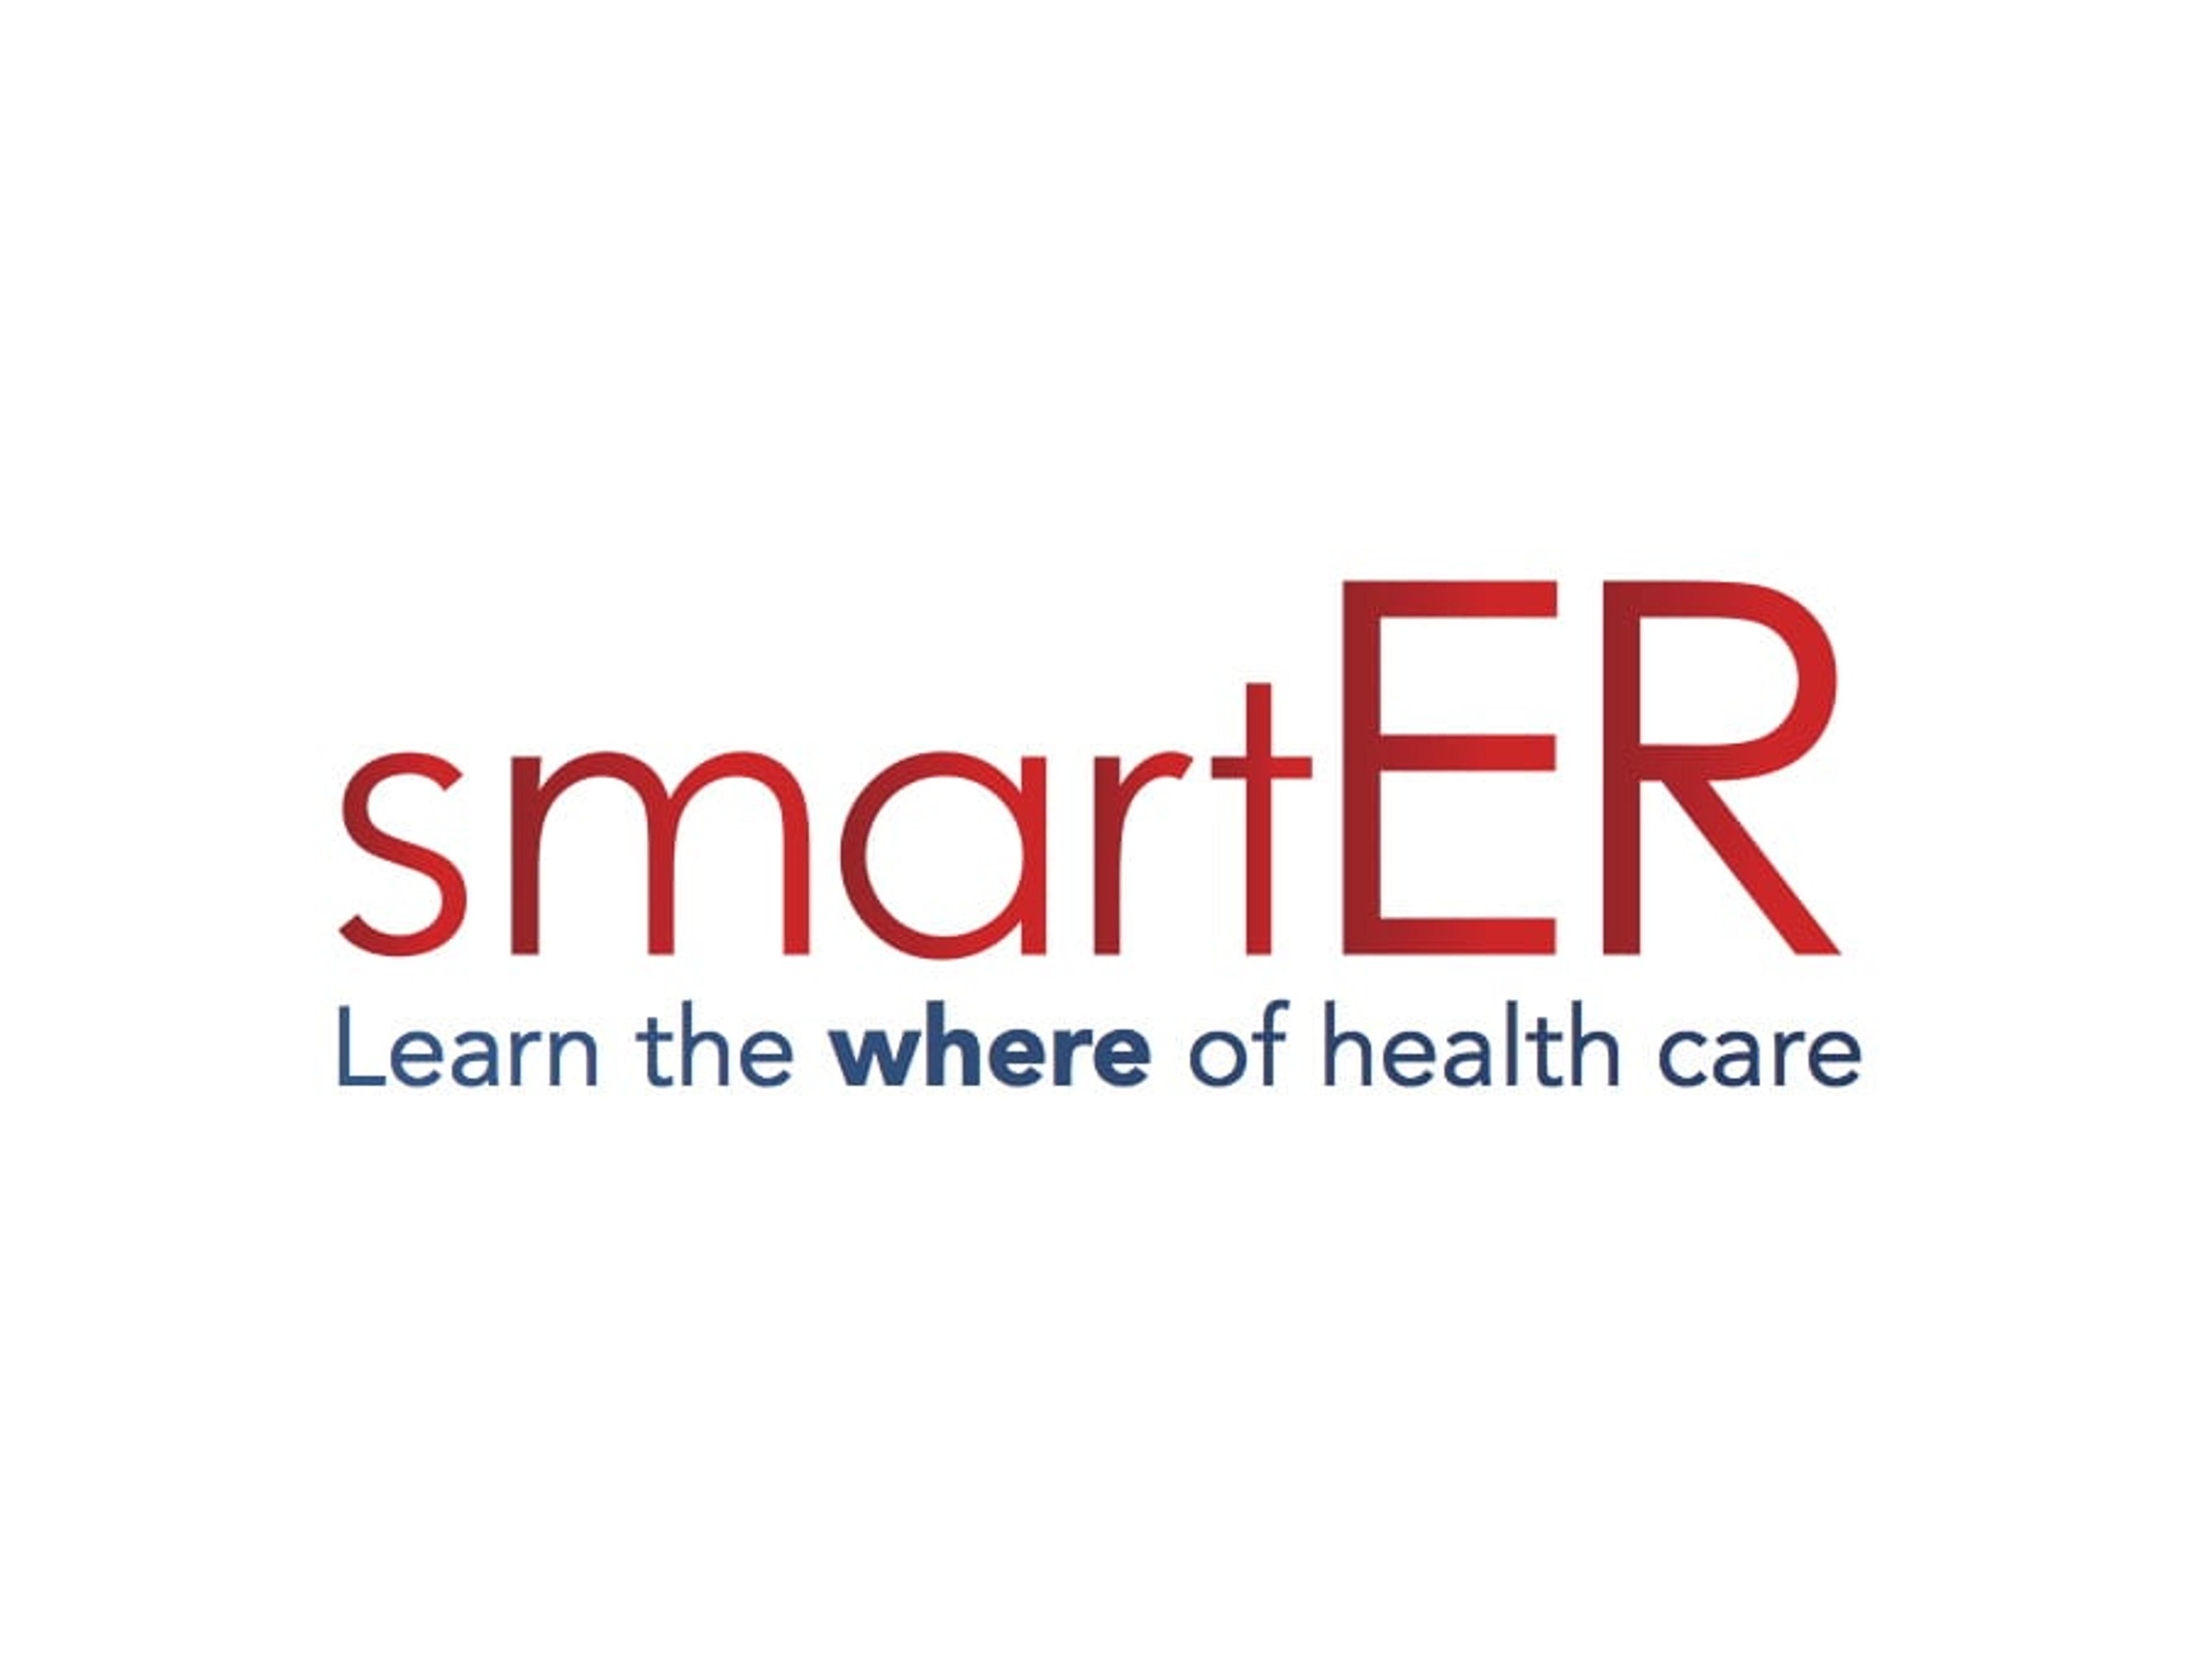 smartER logo 2